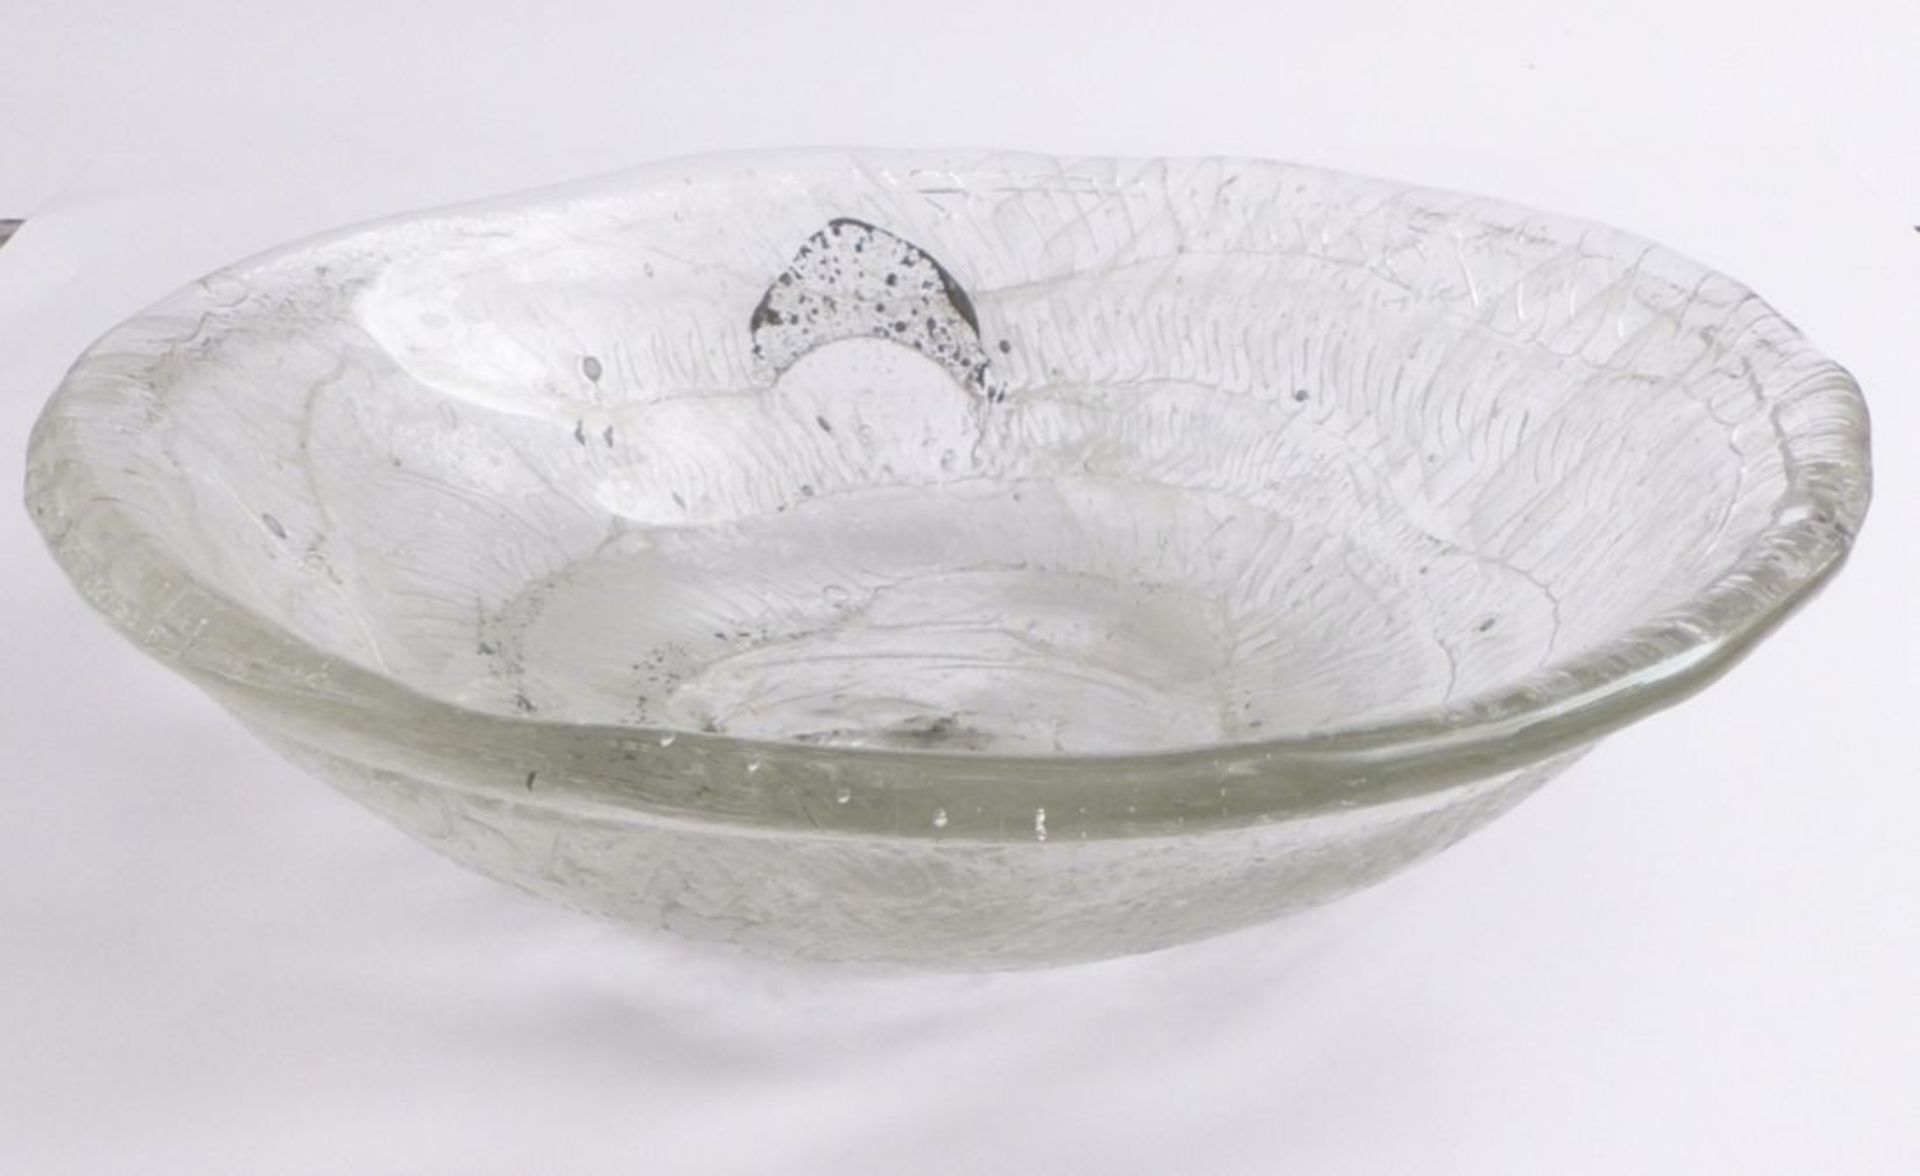 Schagemann, Bernhard (attributed)Large bowl(Bad Waldsee 1933-2016) Colorless glass, wavy with